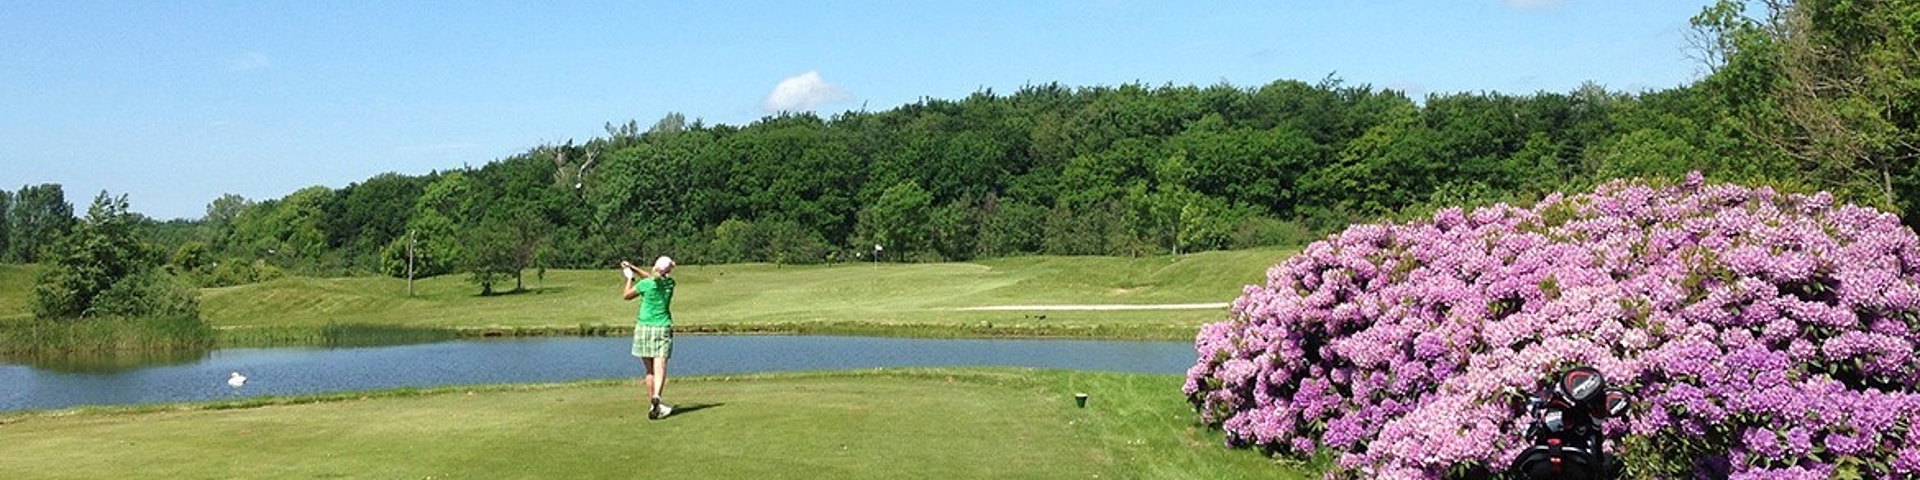 Golfklubben Storstrømmen | Golf på Lolland-Falster